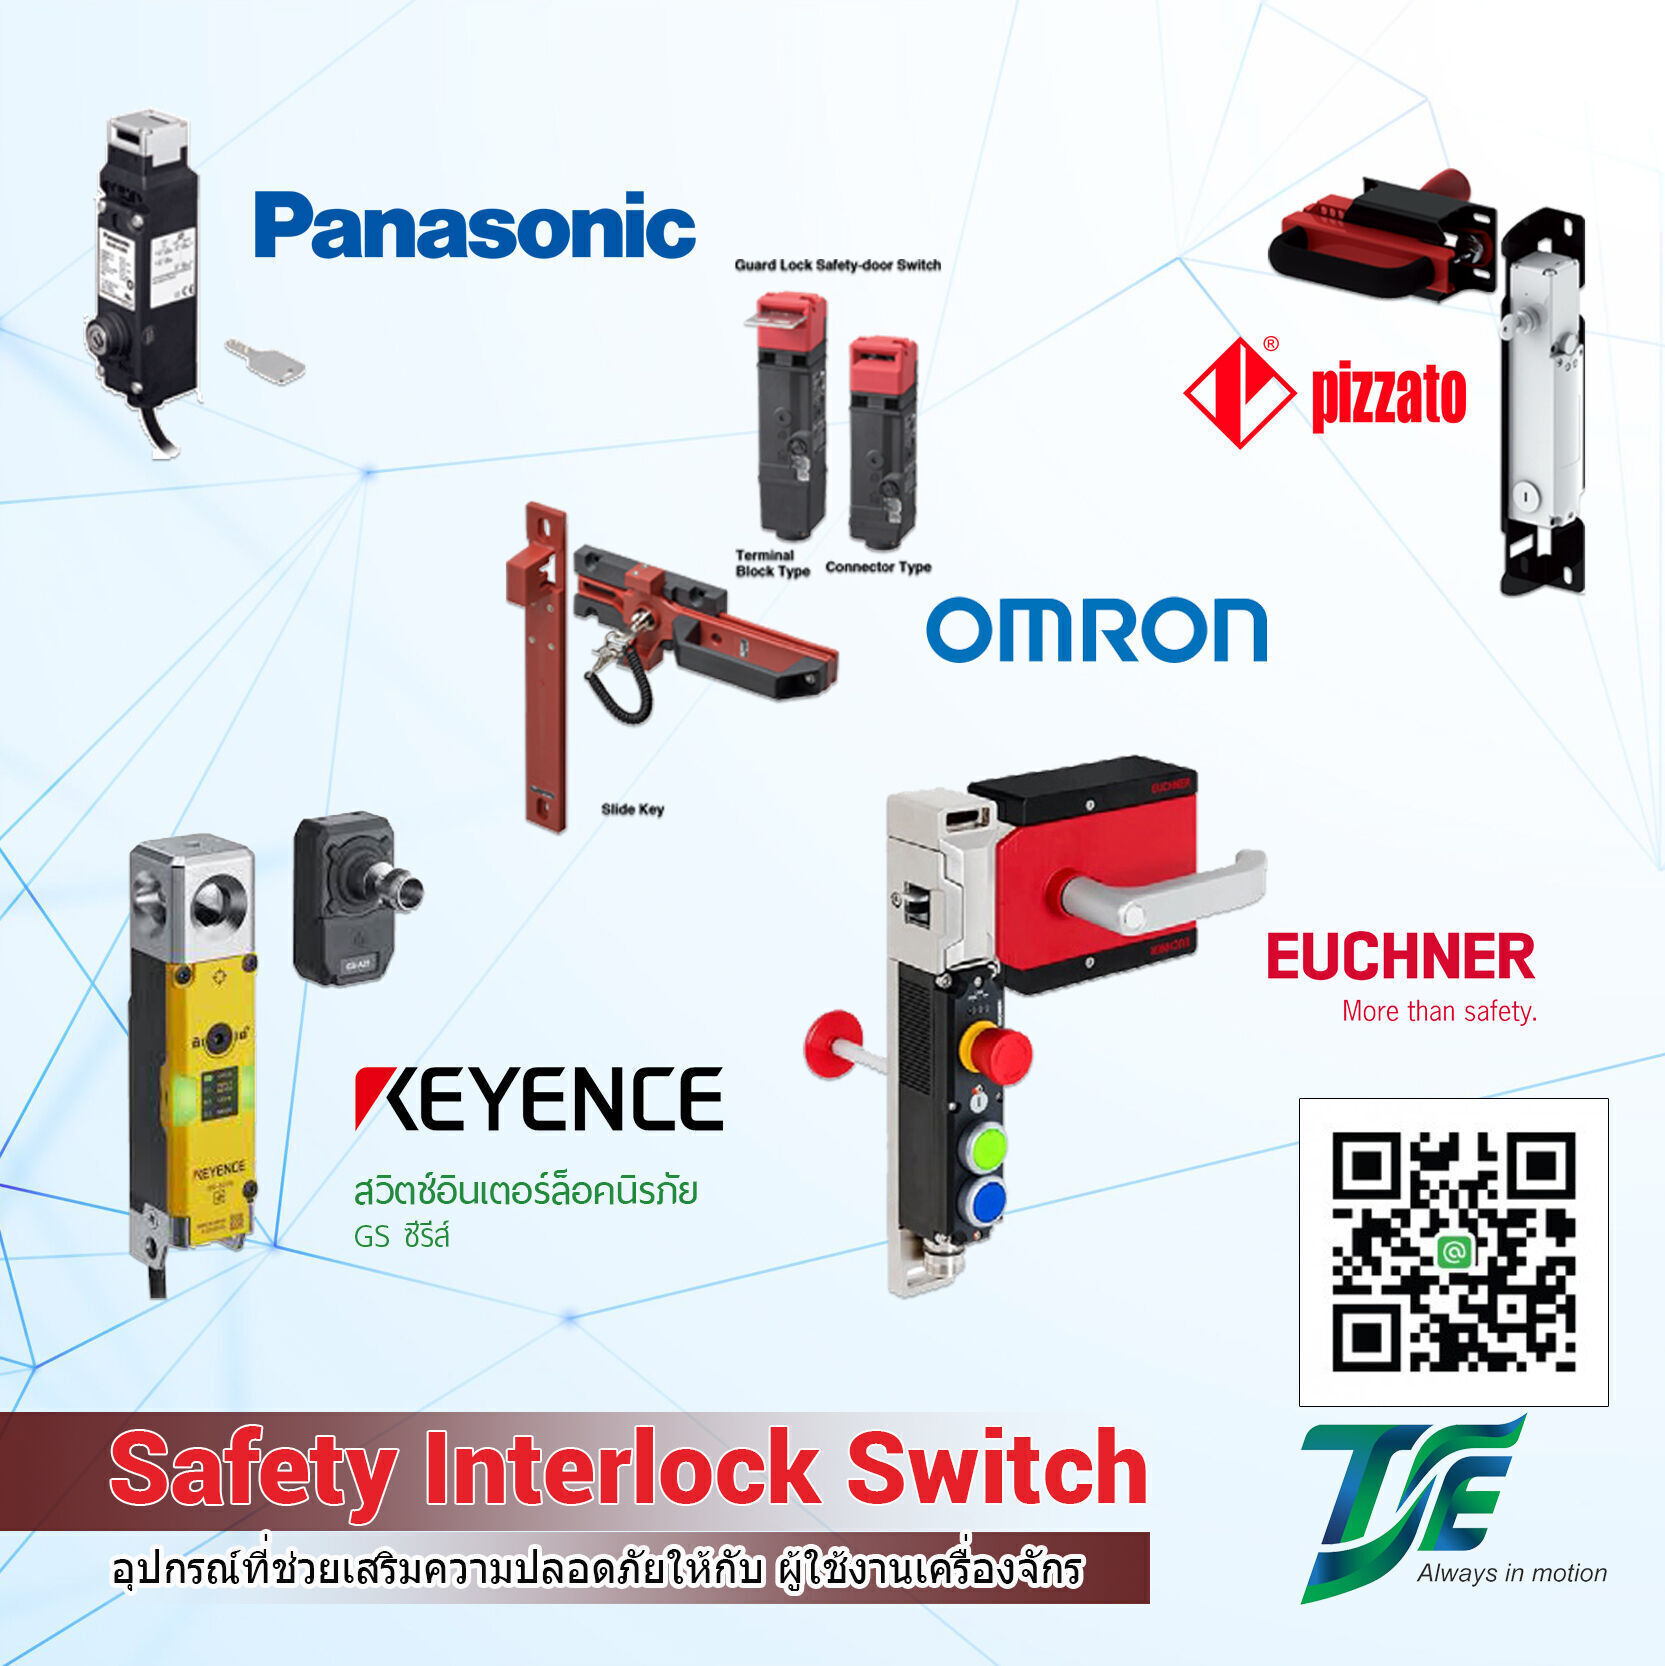 Panasonic
Omron
Pizzato
Keyence
Euchner
Interlock Switch